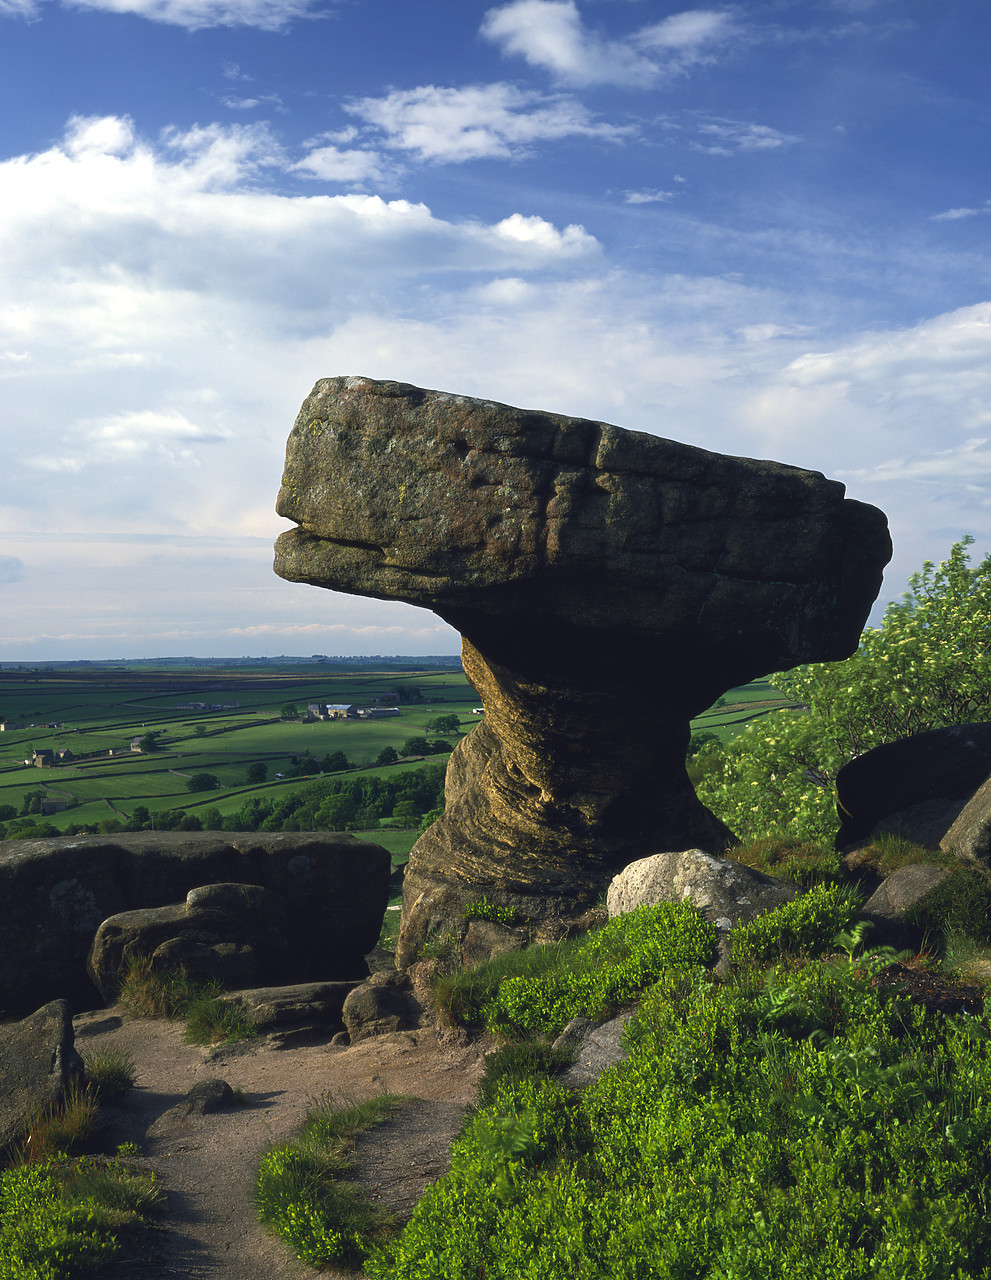 #892191-2 - The Druid's Writing Table, Brimham Rocks, North Yorkshire, England